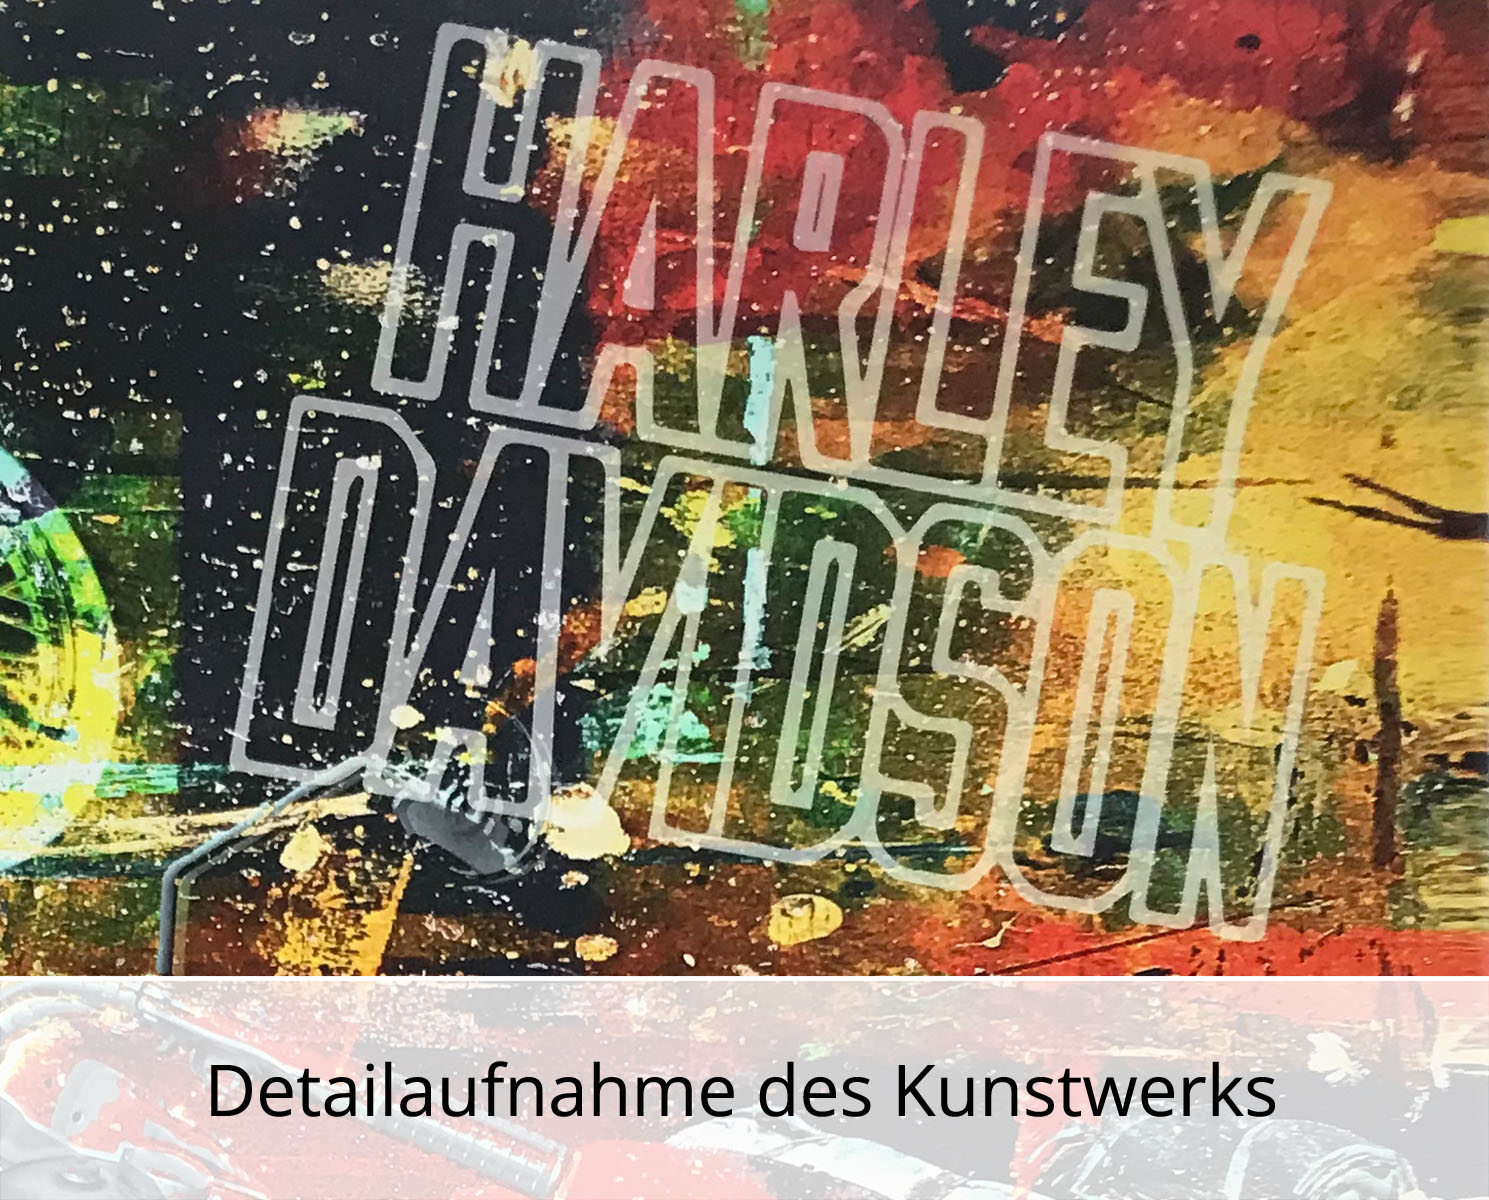 H. Mühlbauer-Gardemin: "Harley", Moderne Pop Art, Original/serielles Unikat